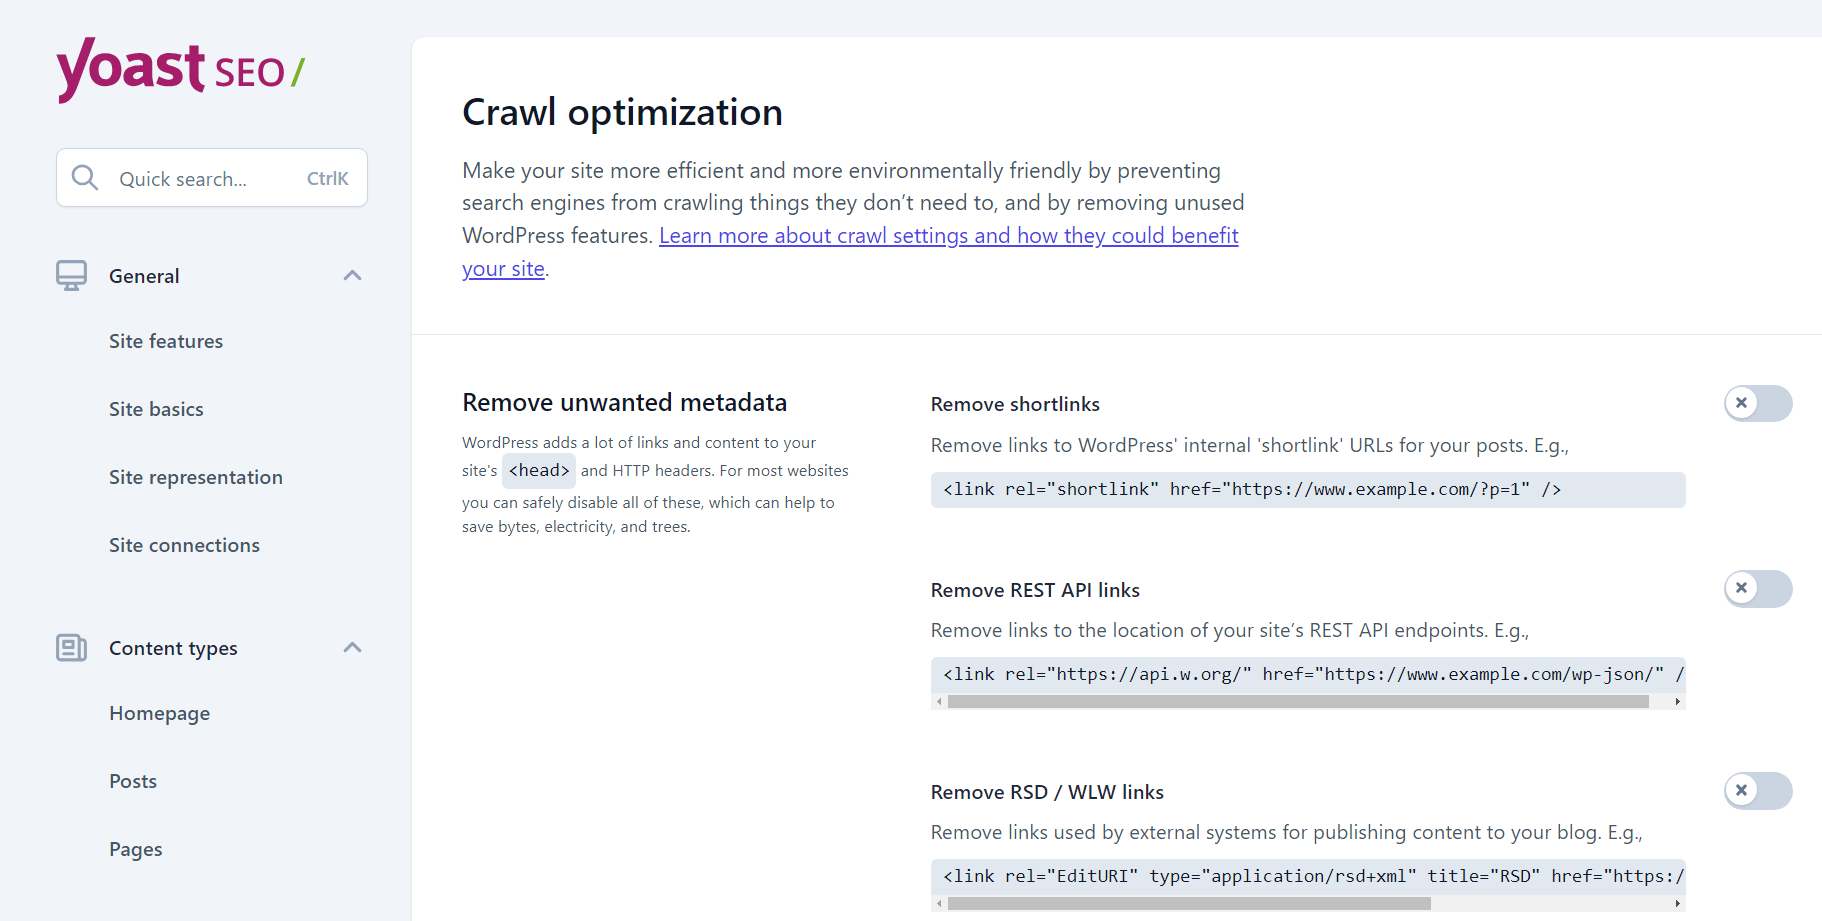 Crawl optimization settings for Yoast SEO.